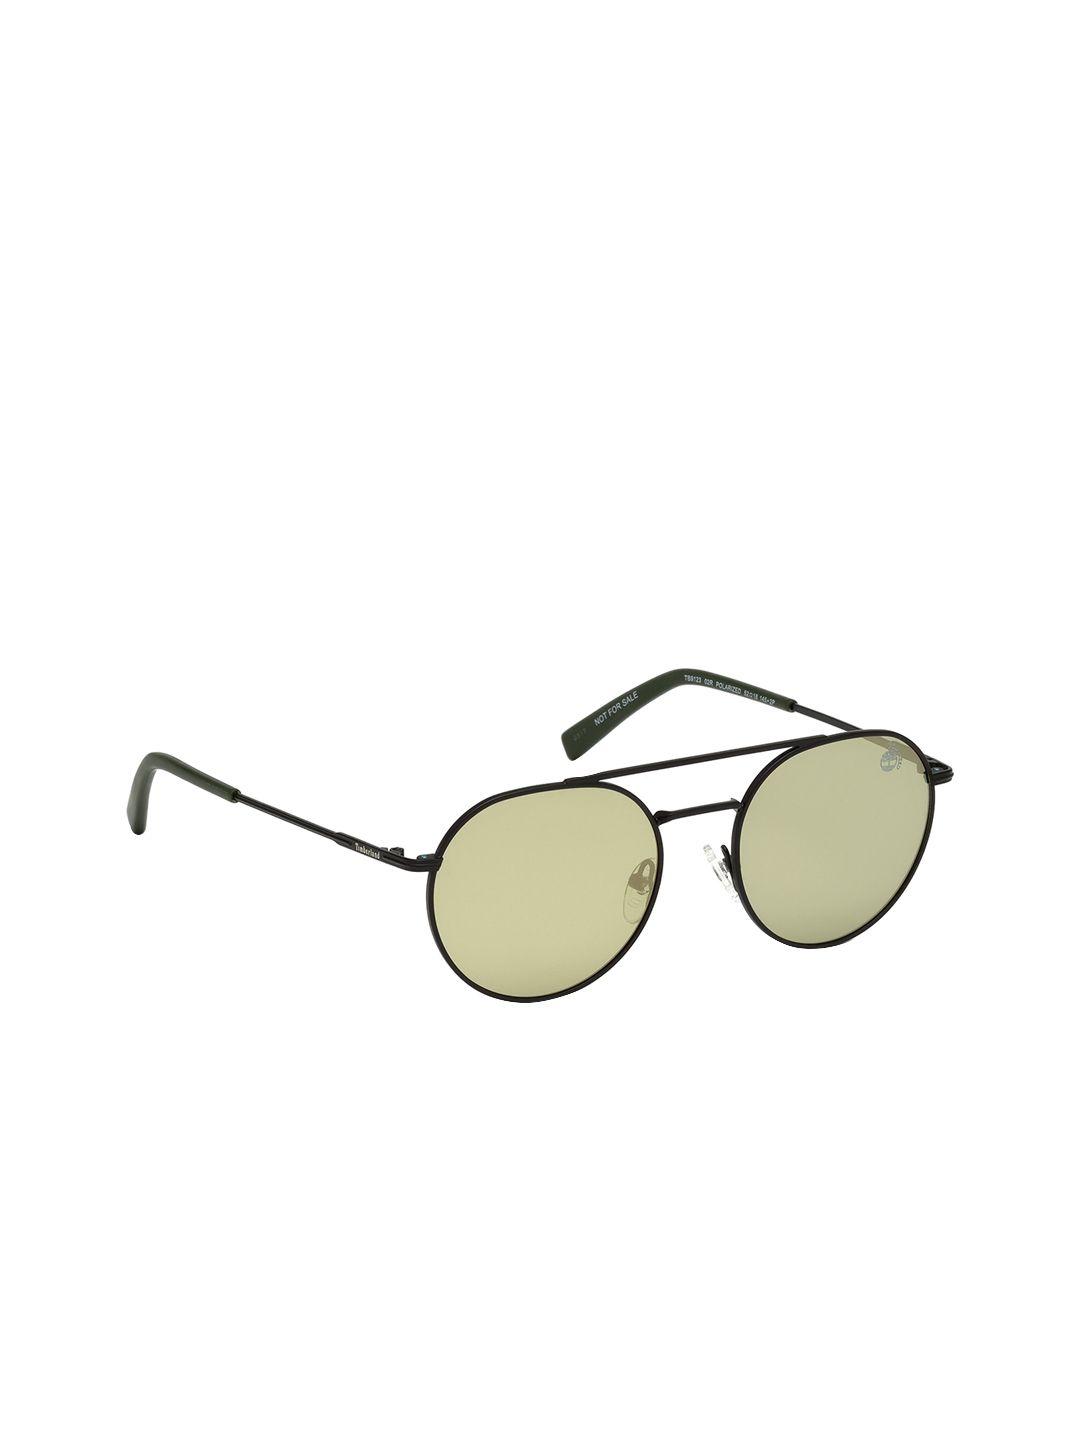 timberland men green aviator sunglasses tb9123 52 02r